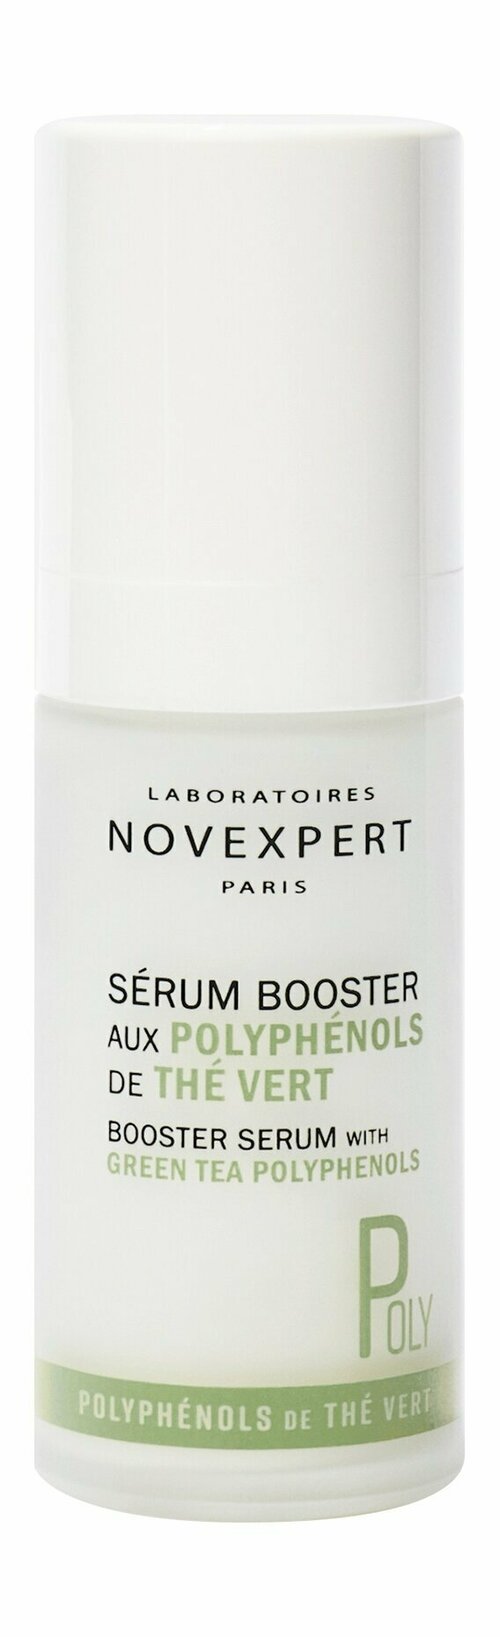 NOVEXPERT Booster Serum With Green Tea Polyphenols Сыворотка-бустер с полифенолами, 30 мл